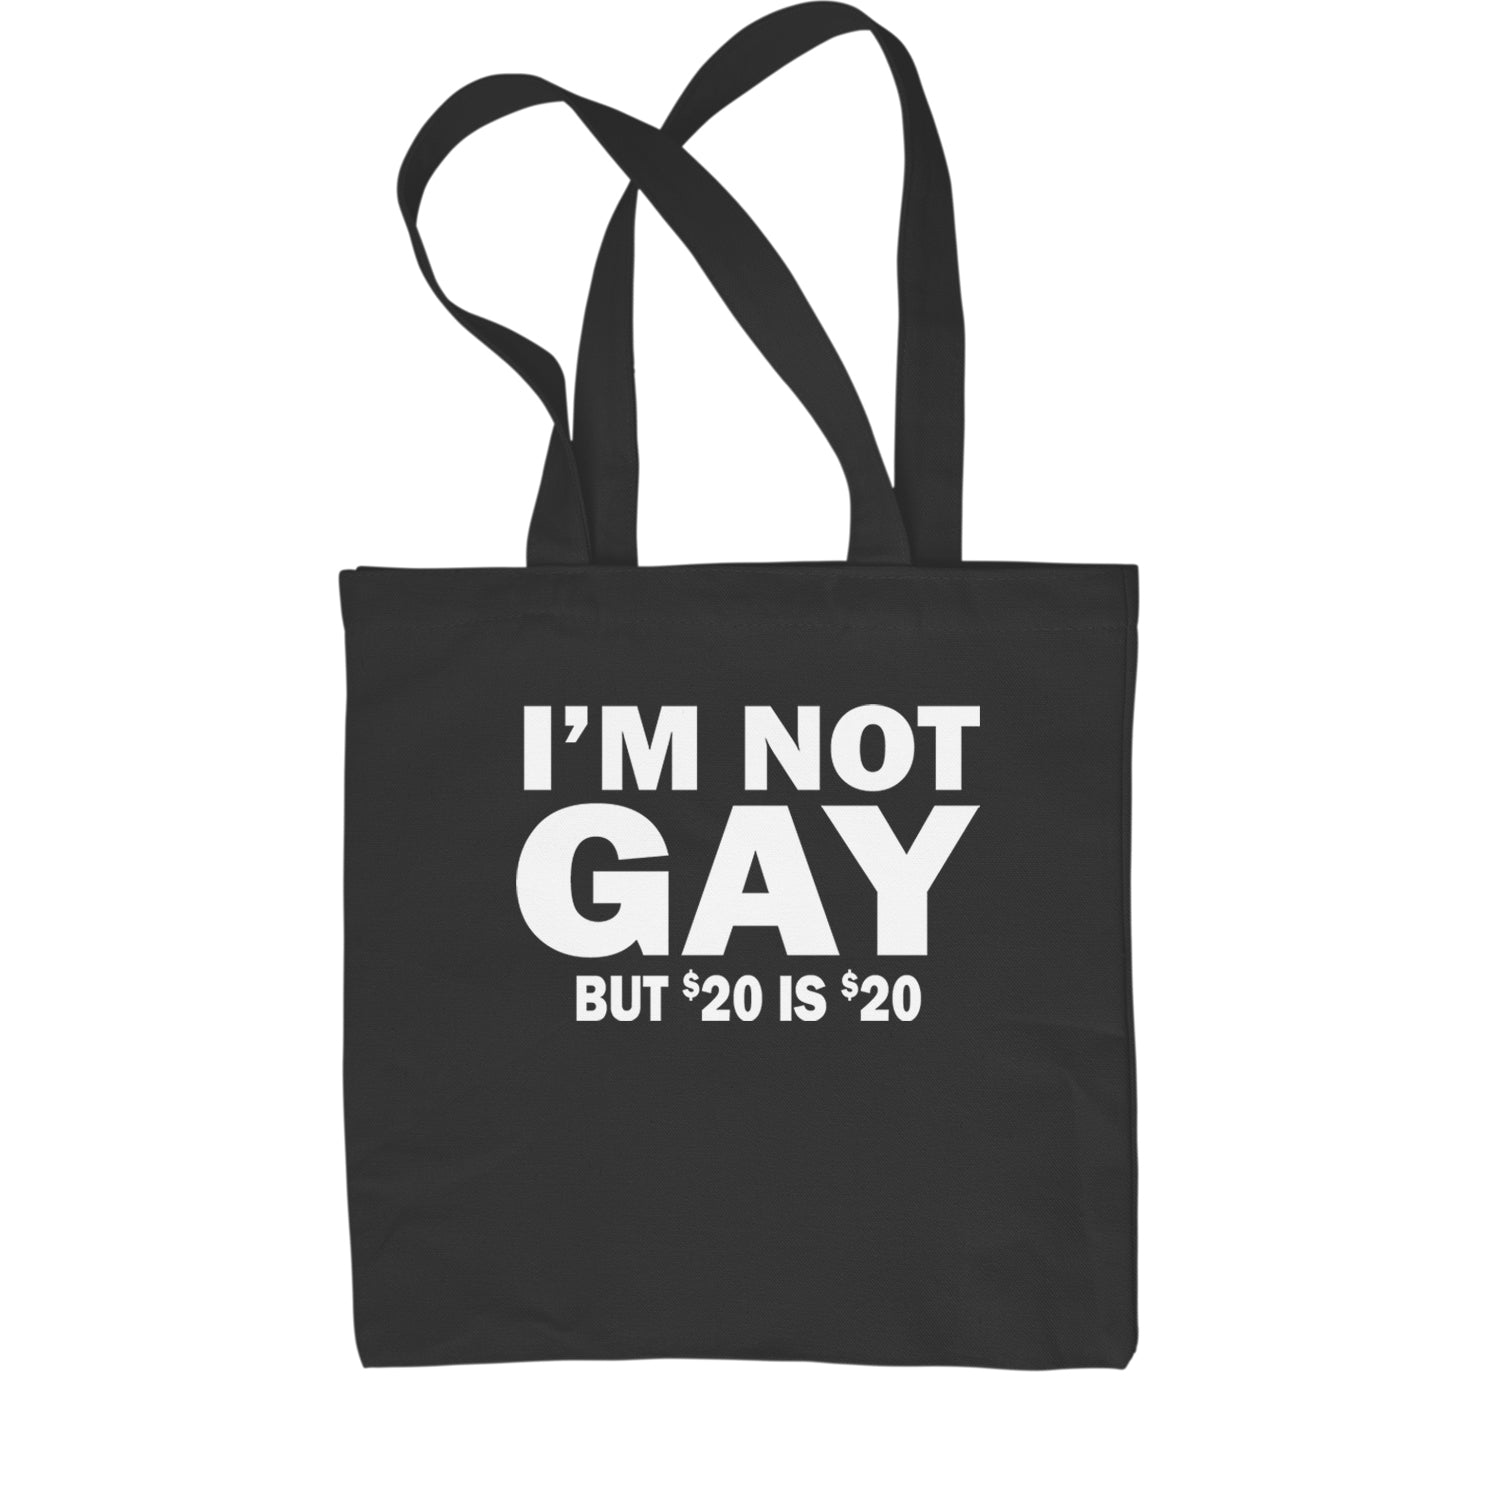 I'm Not Gay, But $20 Bucks is $20 Bucks Shopping Tote Bag